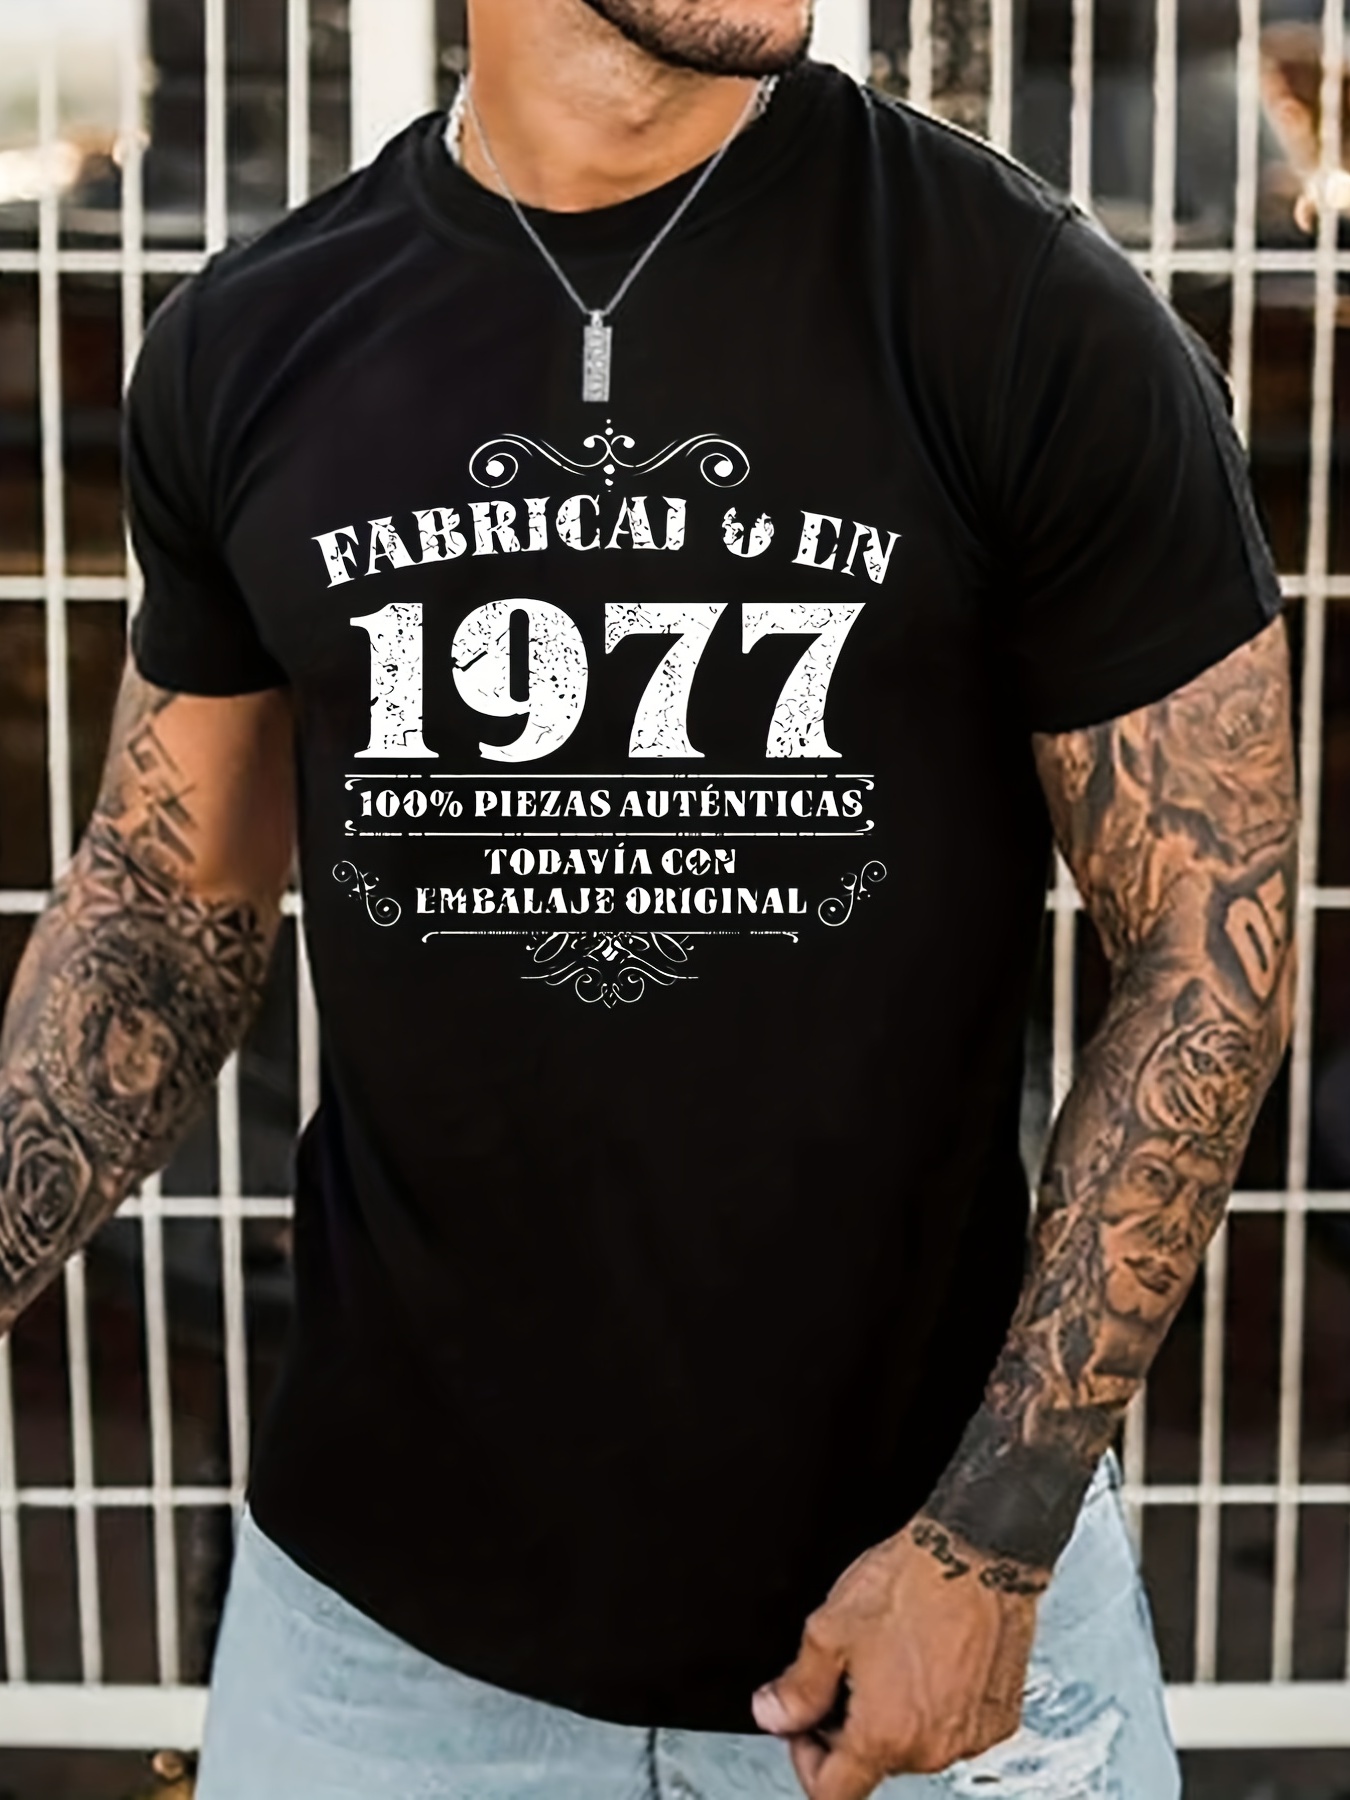 1977 Men's Dri-Power T-Shirt by Vintage Brand